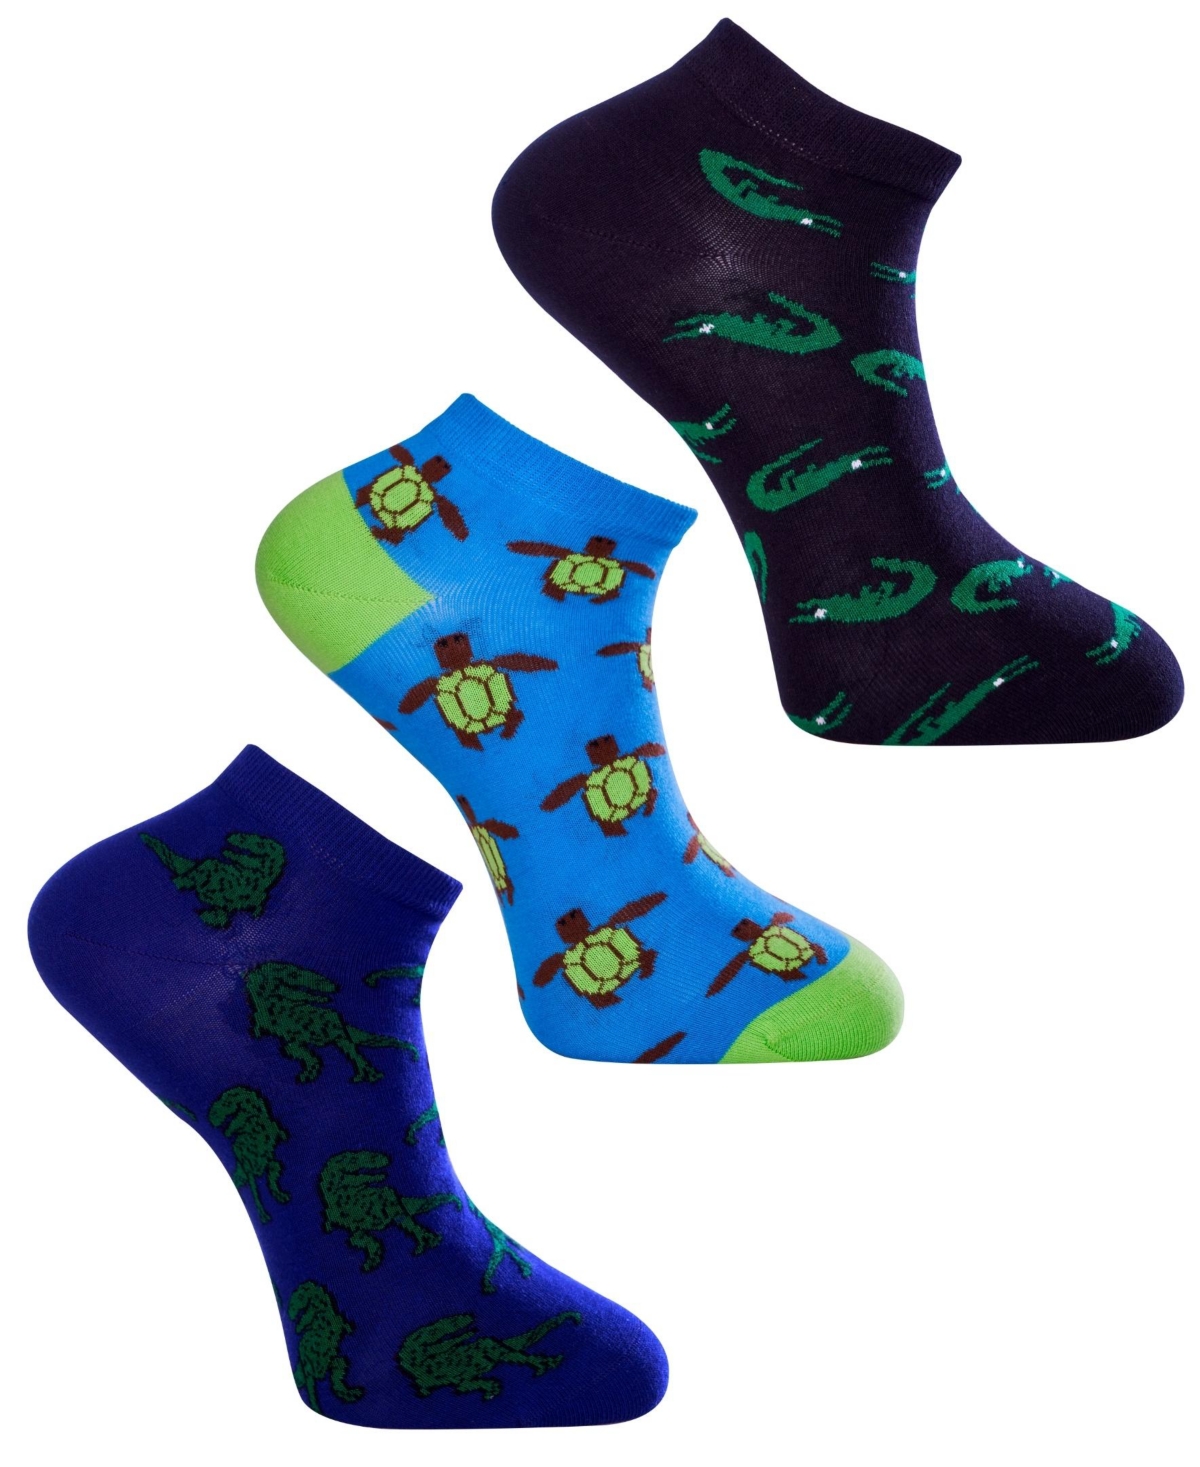 Mens Novelty Ankle Socks, Pack of 3 - Multi Color